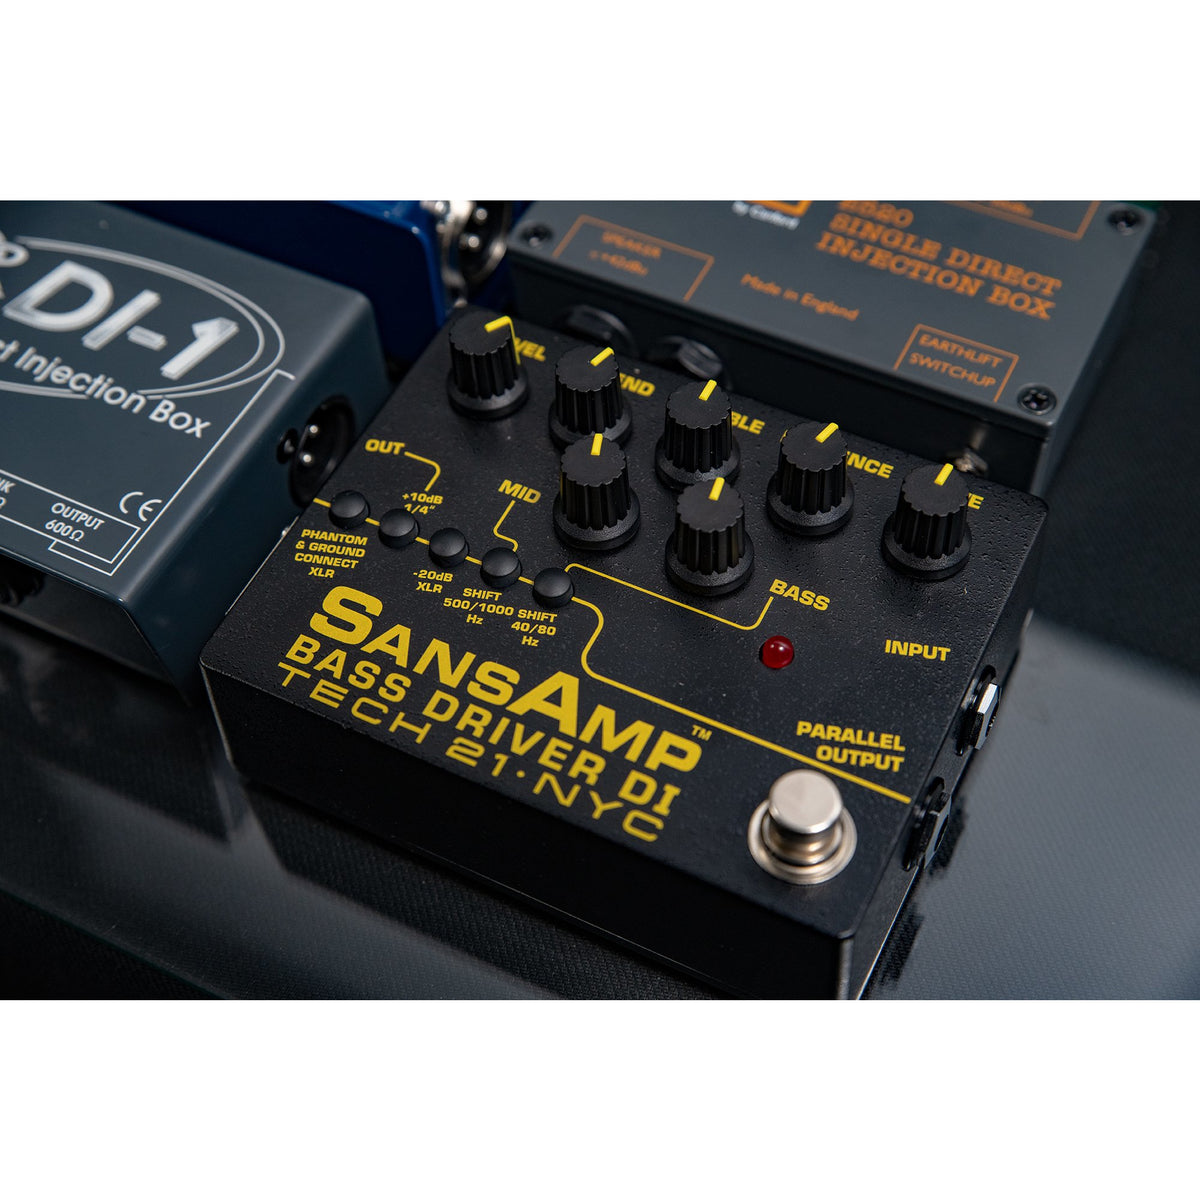 SansAmp BASS DRIVER DI Version 2 - Pre-Amp and DI Tailored for Bass